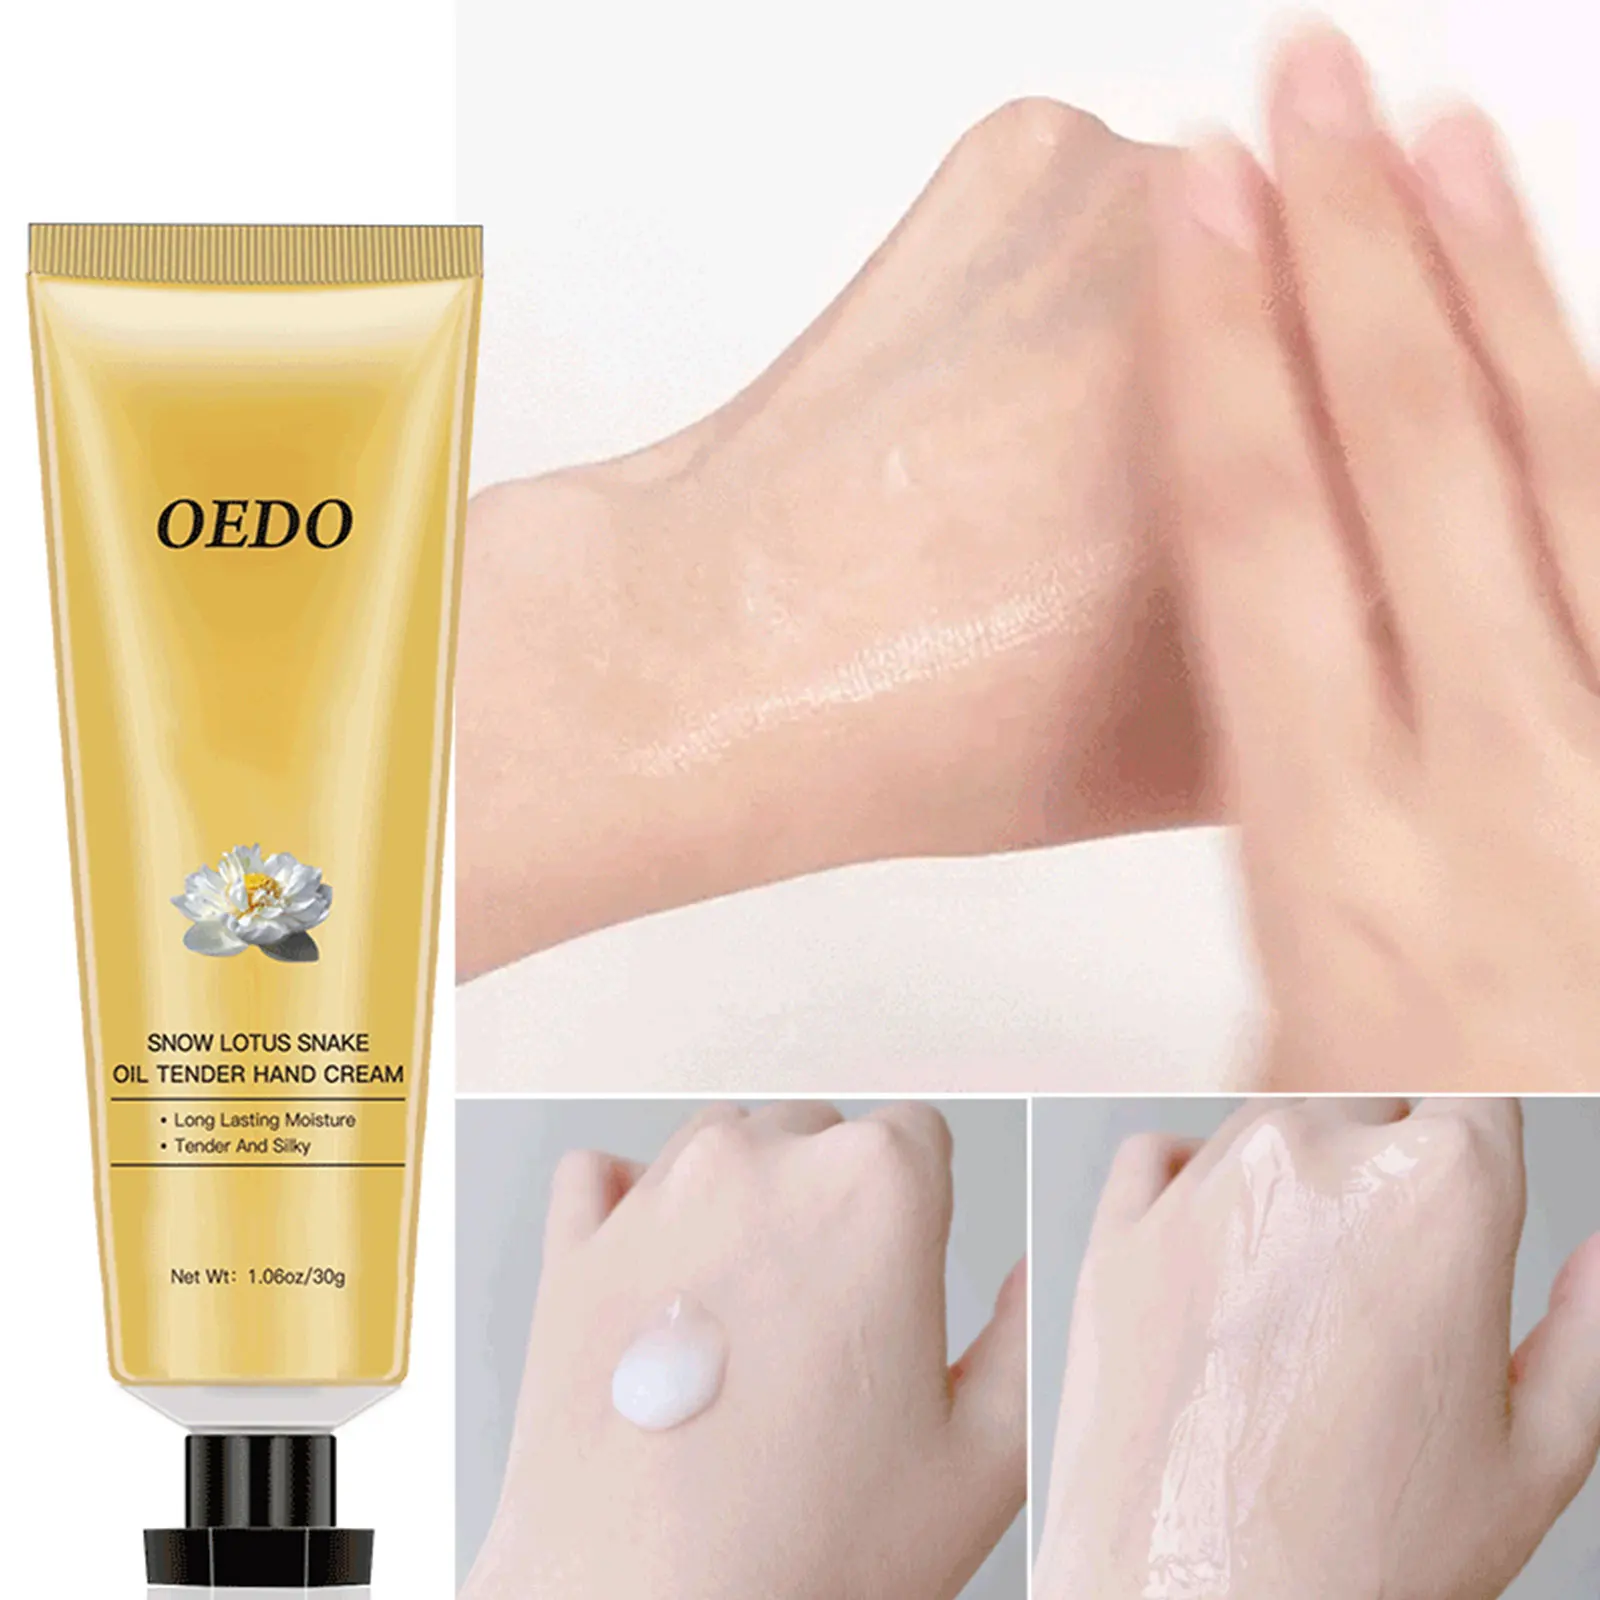 

OEDO Snow Lotus Snake Oil Tender Hand Cream Anti Chapping Anti Aging Whitening Moisturizing Nourishing Hand Care 30g